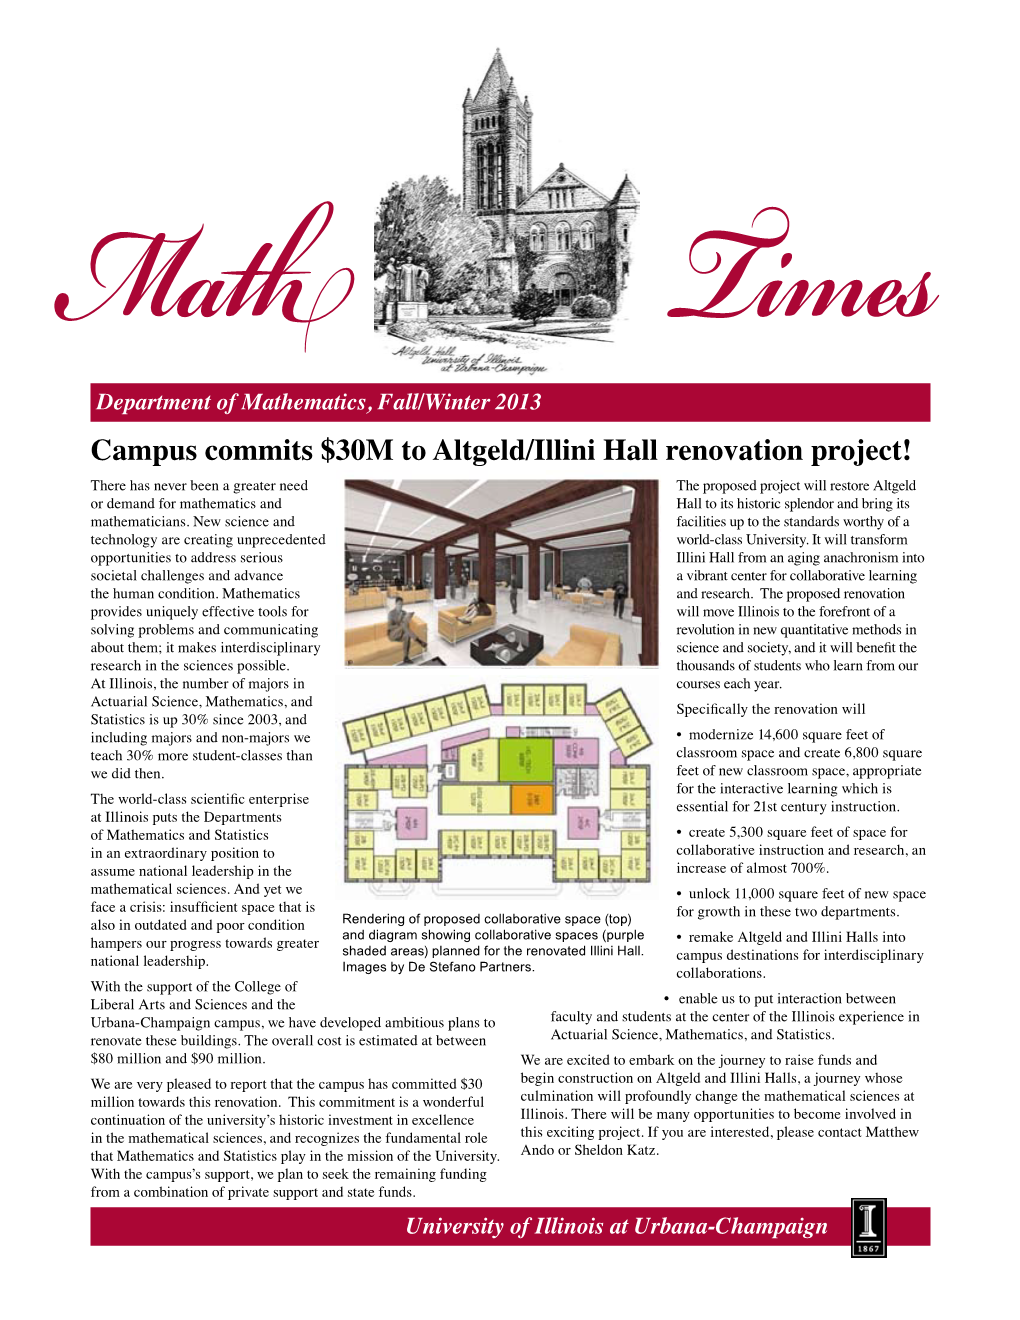 Campus Commits $30M to Altgeld/Illini Hall Renovation Project!